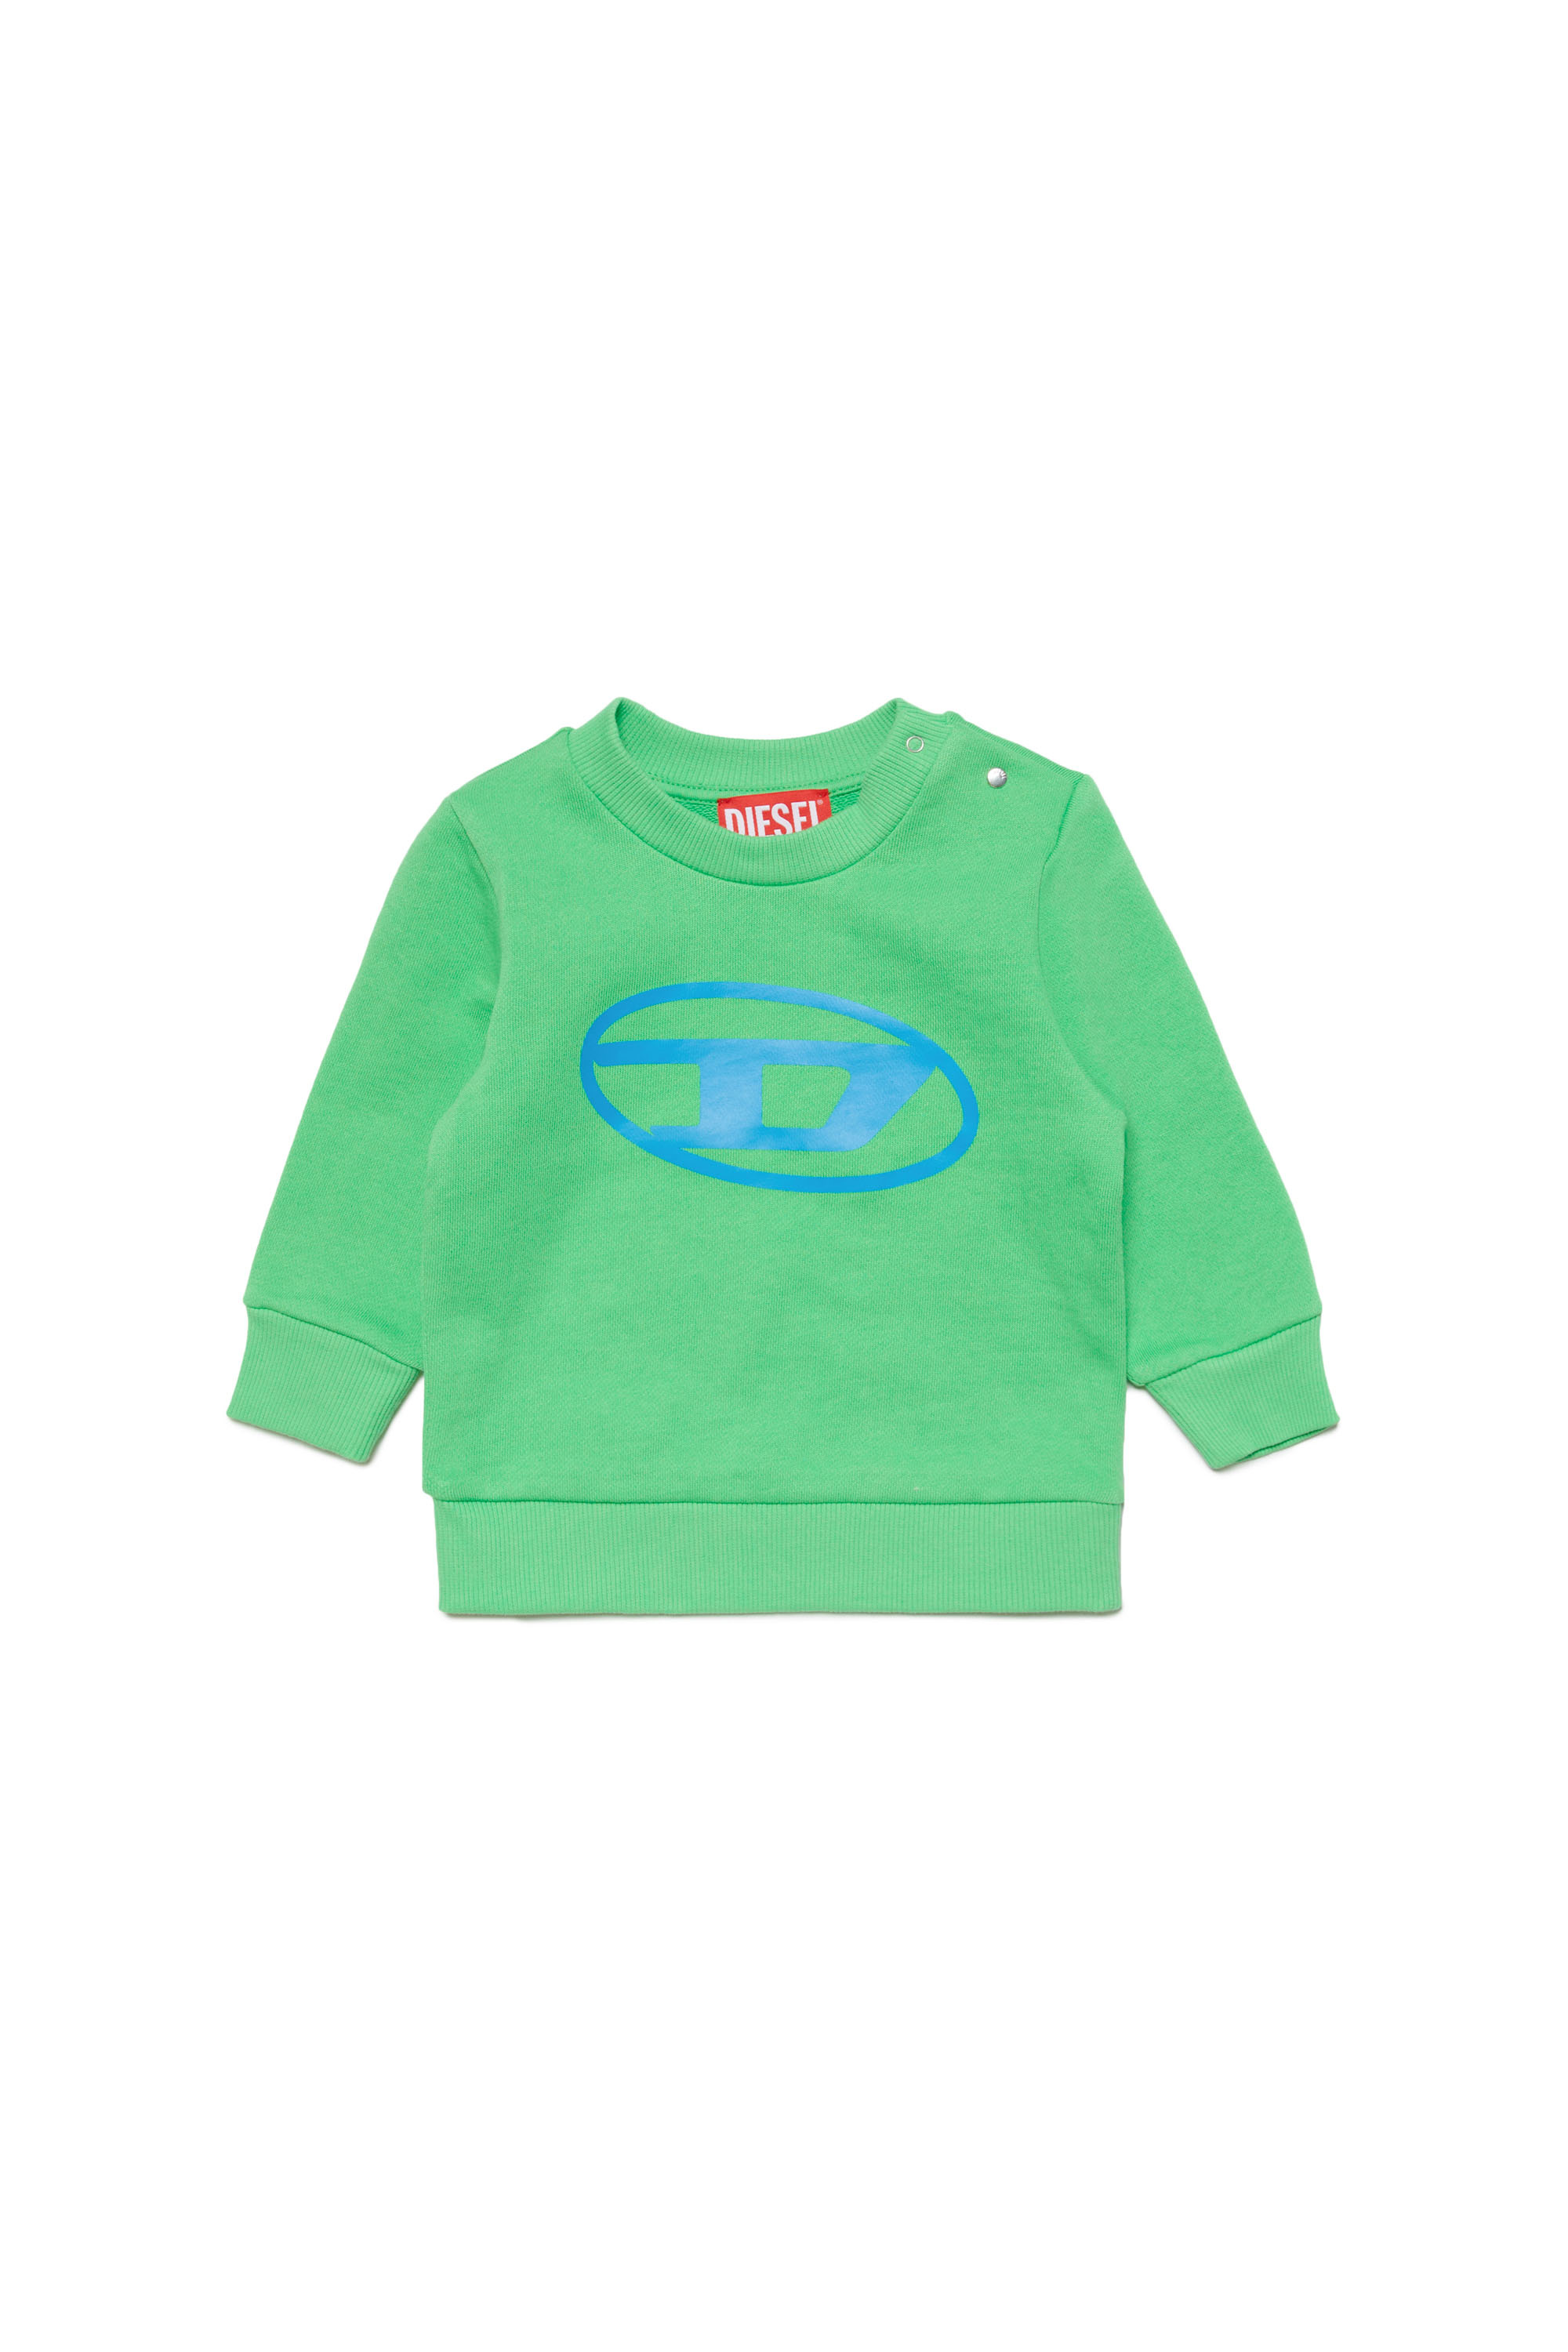 Diesel - Cotton sweatshirt with Oval D - Sweaters - Unisex - Green